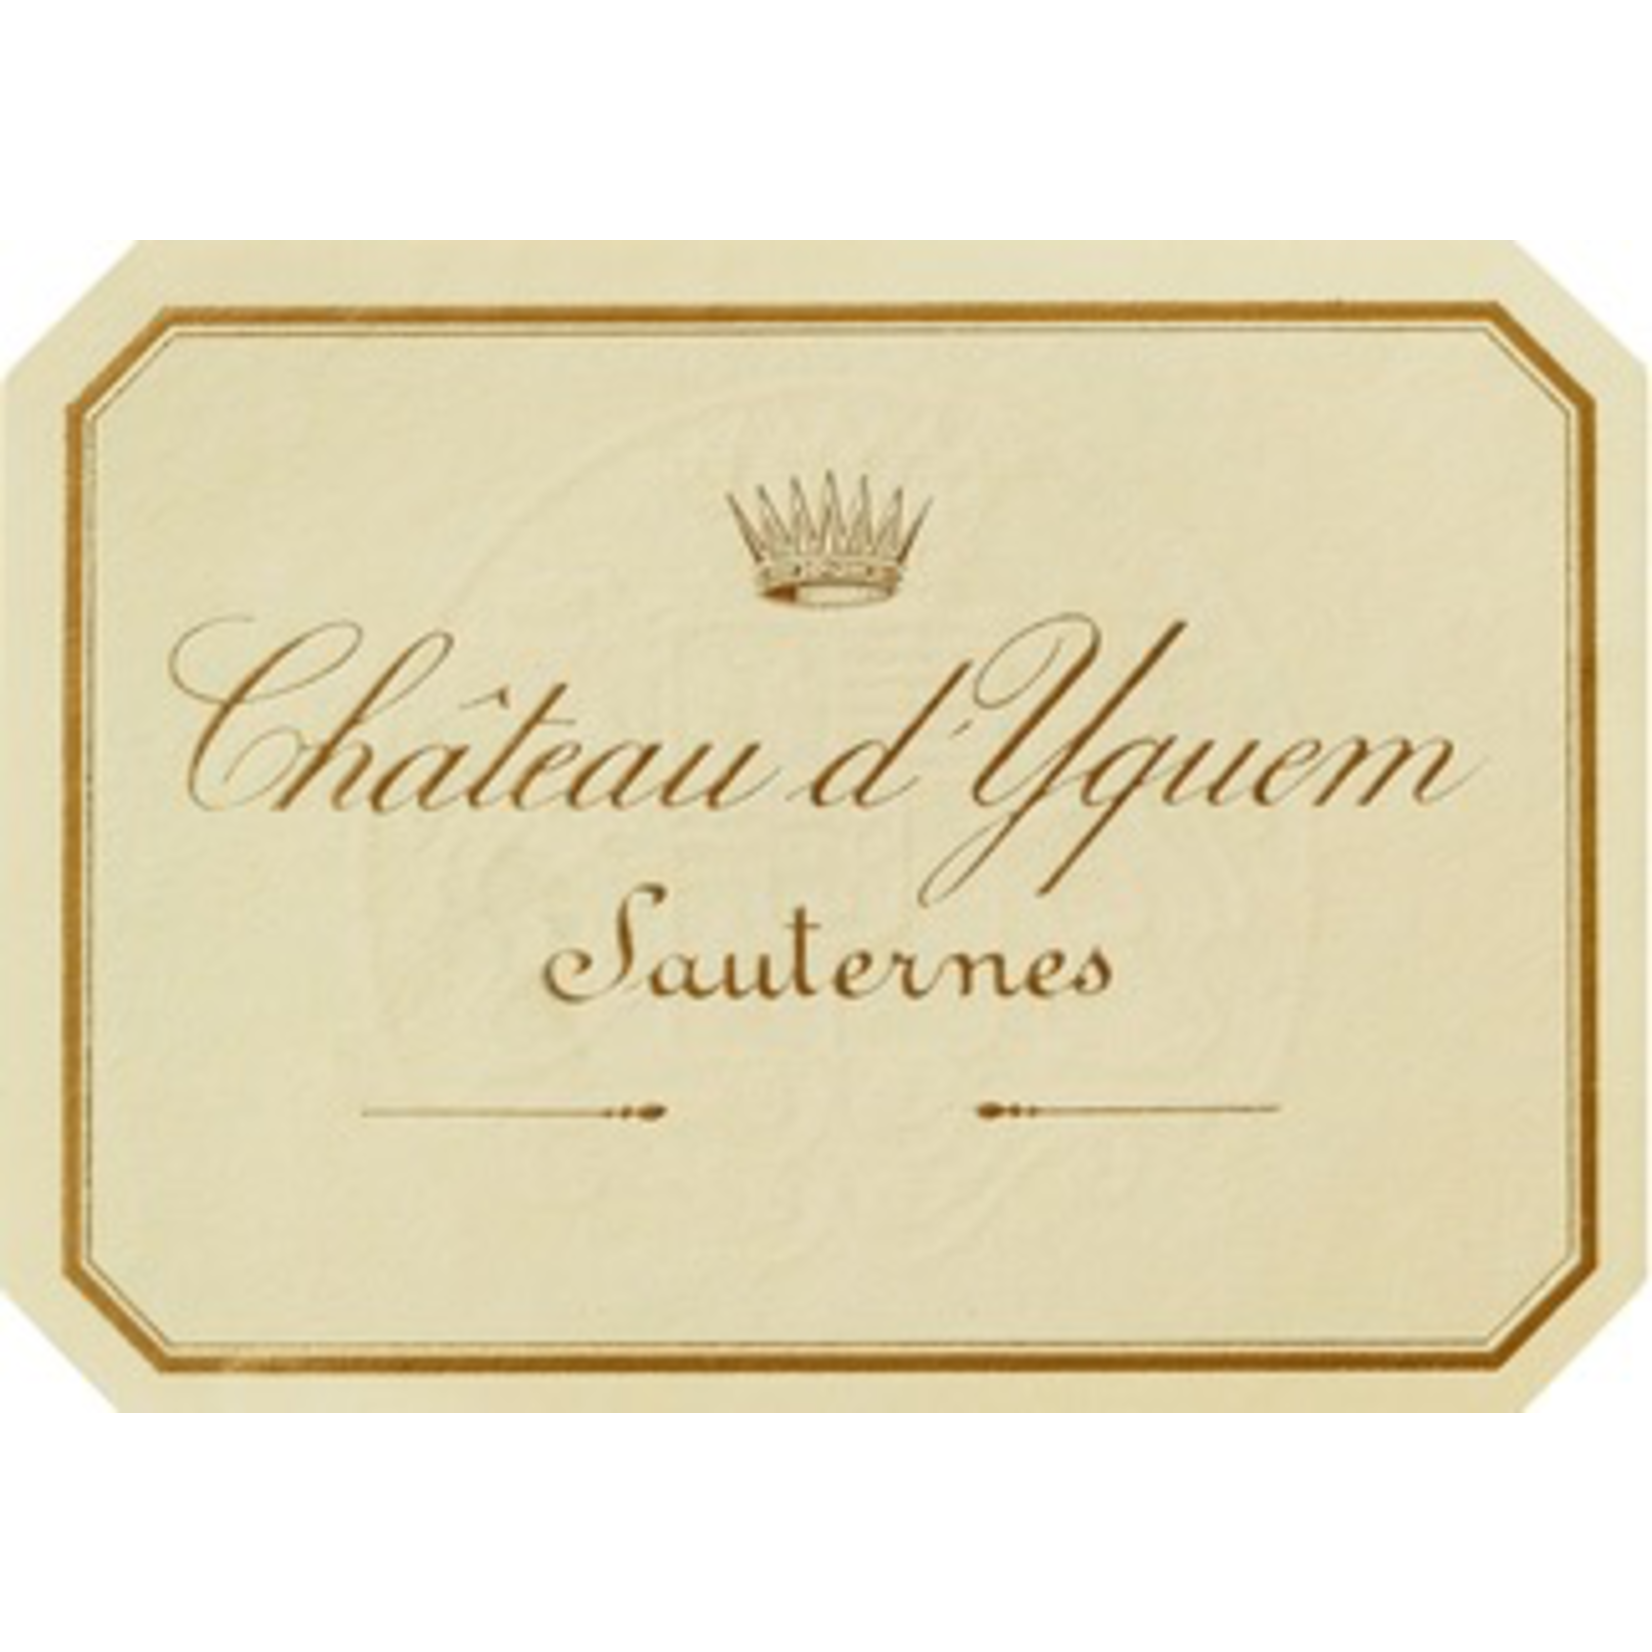 Wine Chateau d’Yquem 2005 375ml